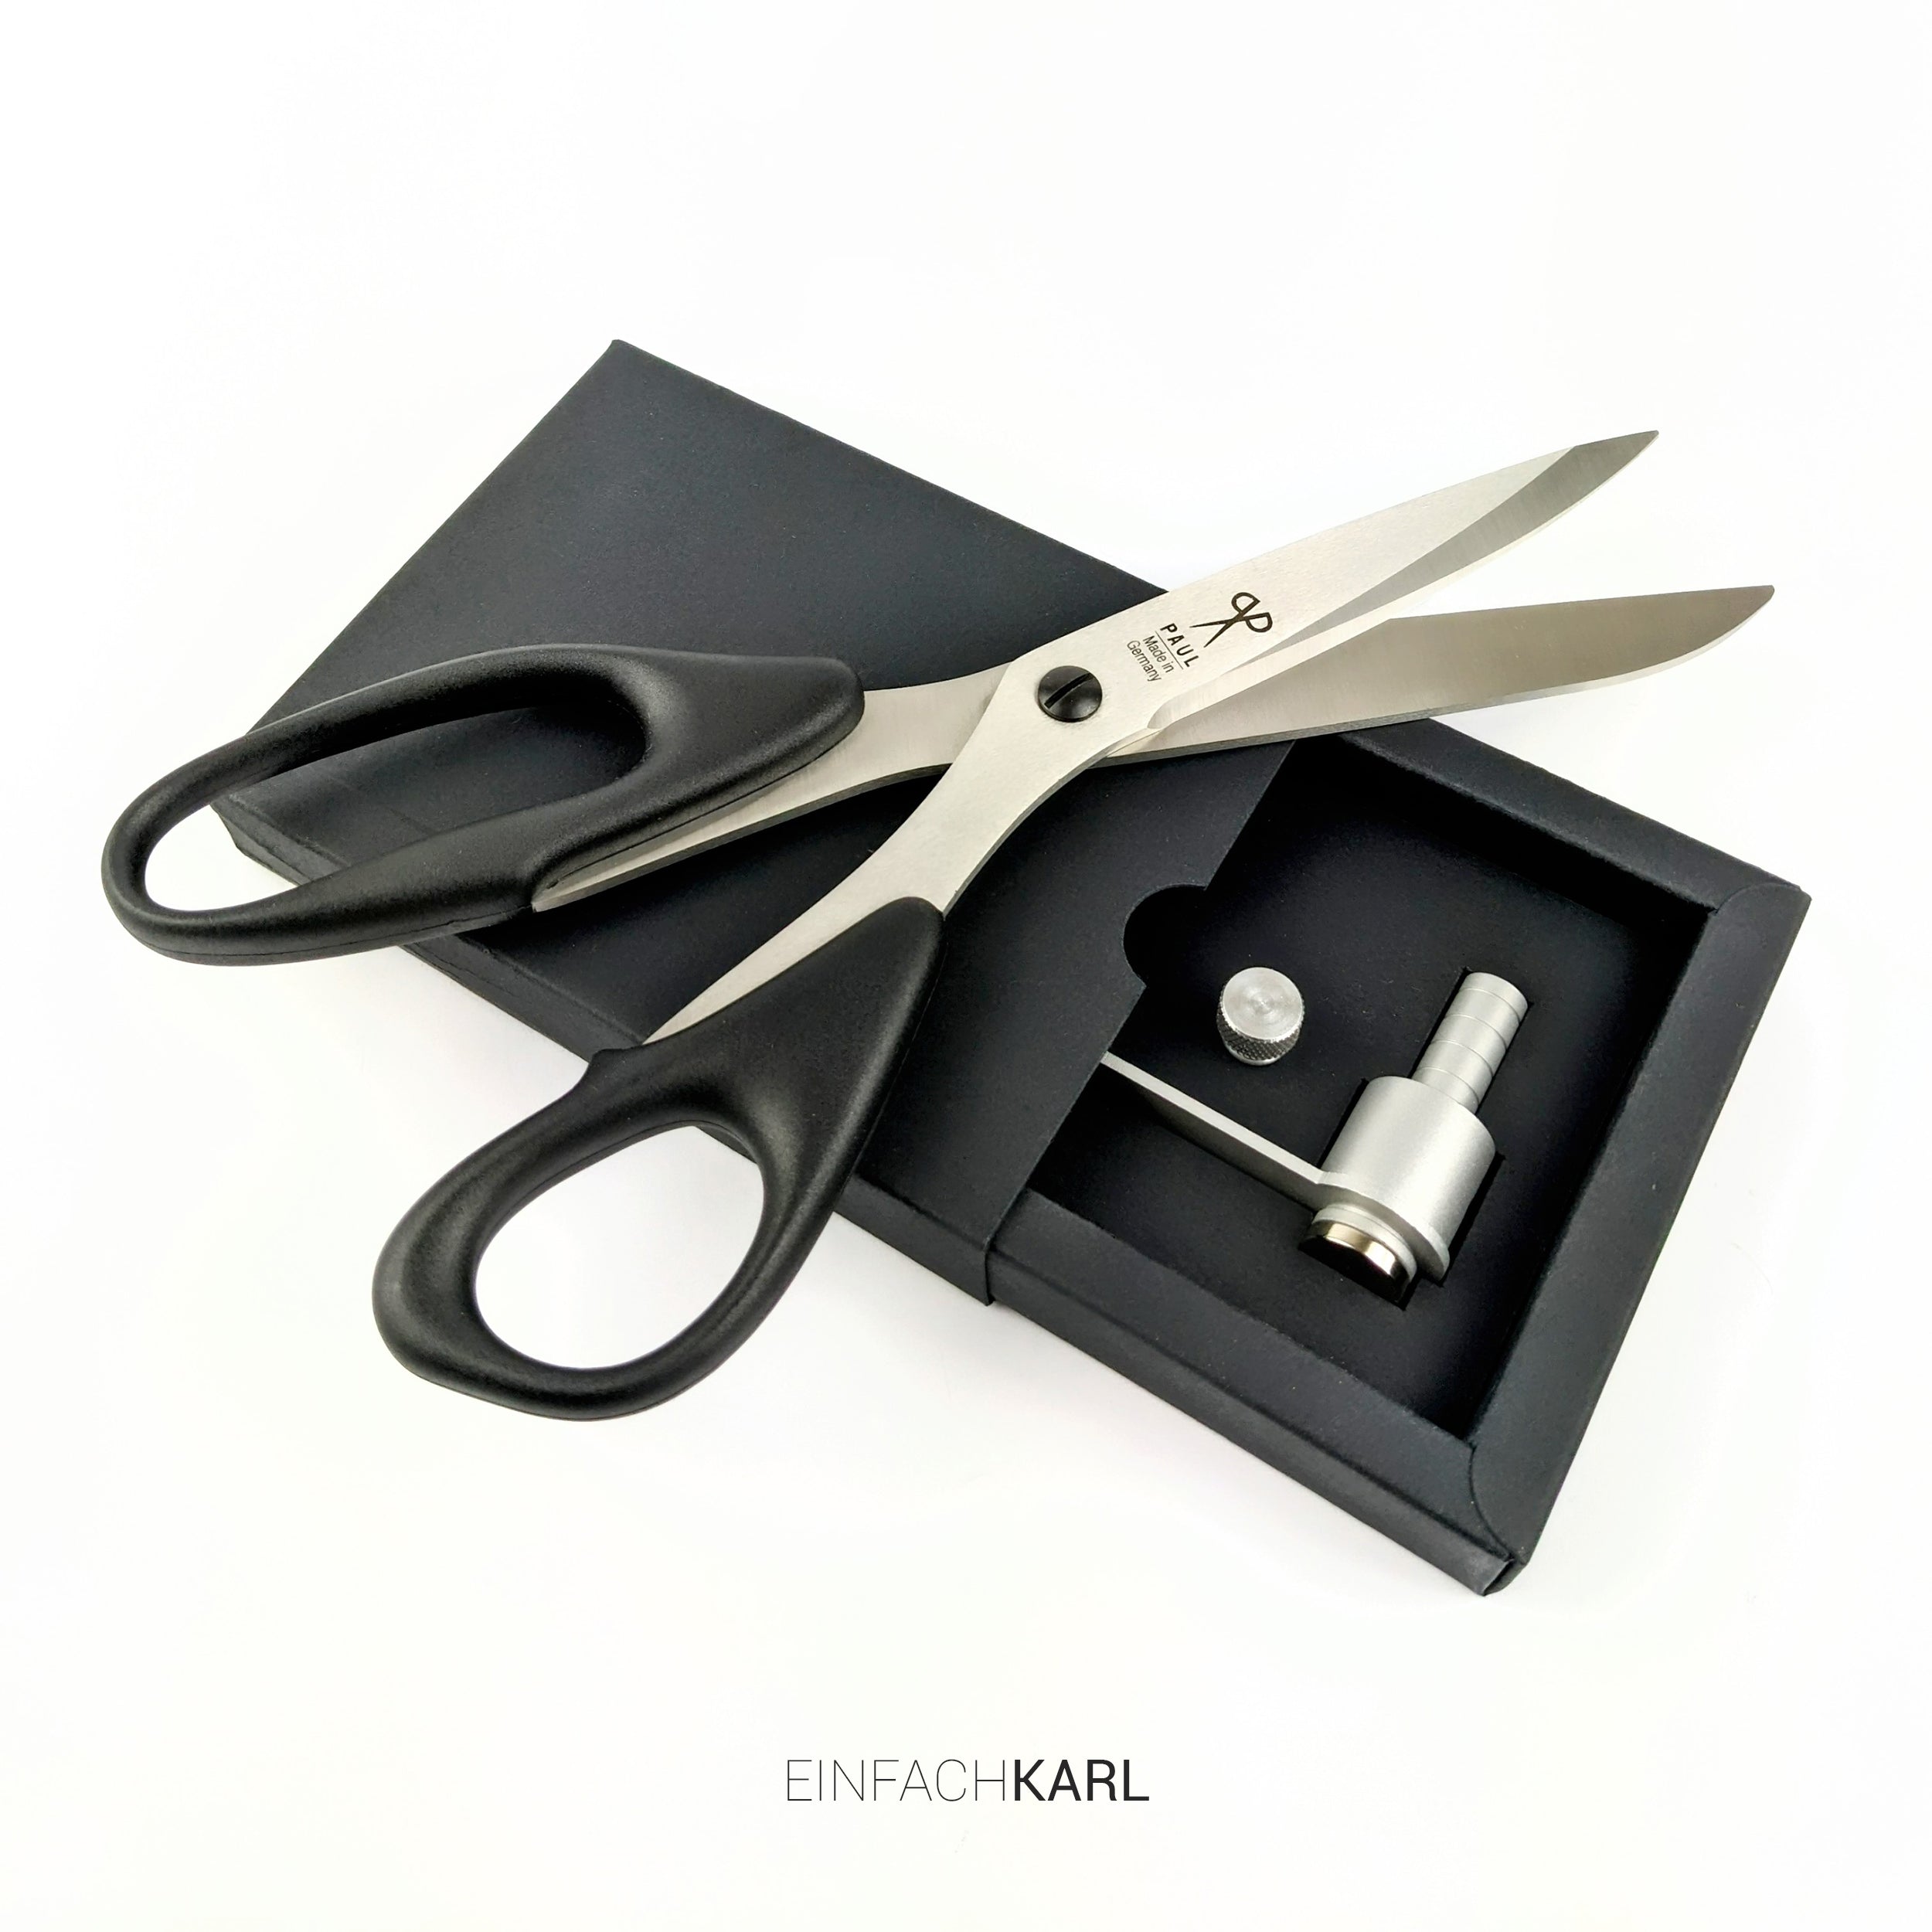 Large scissors set (Silver Edition)